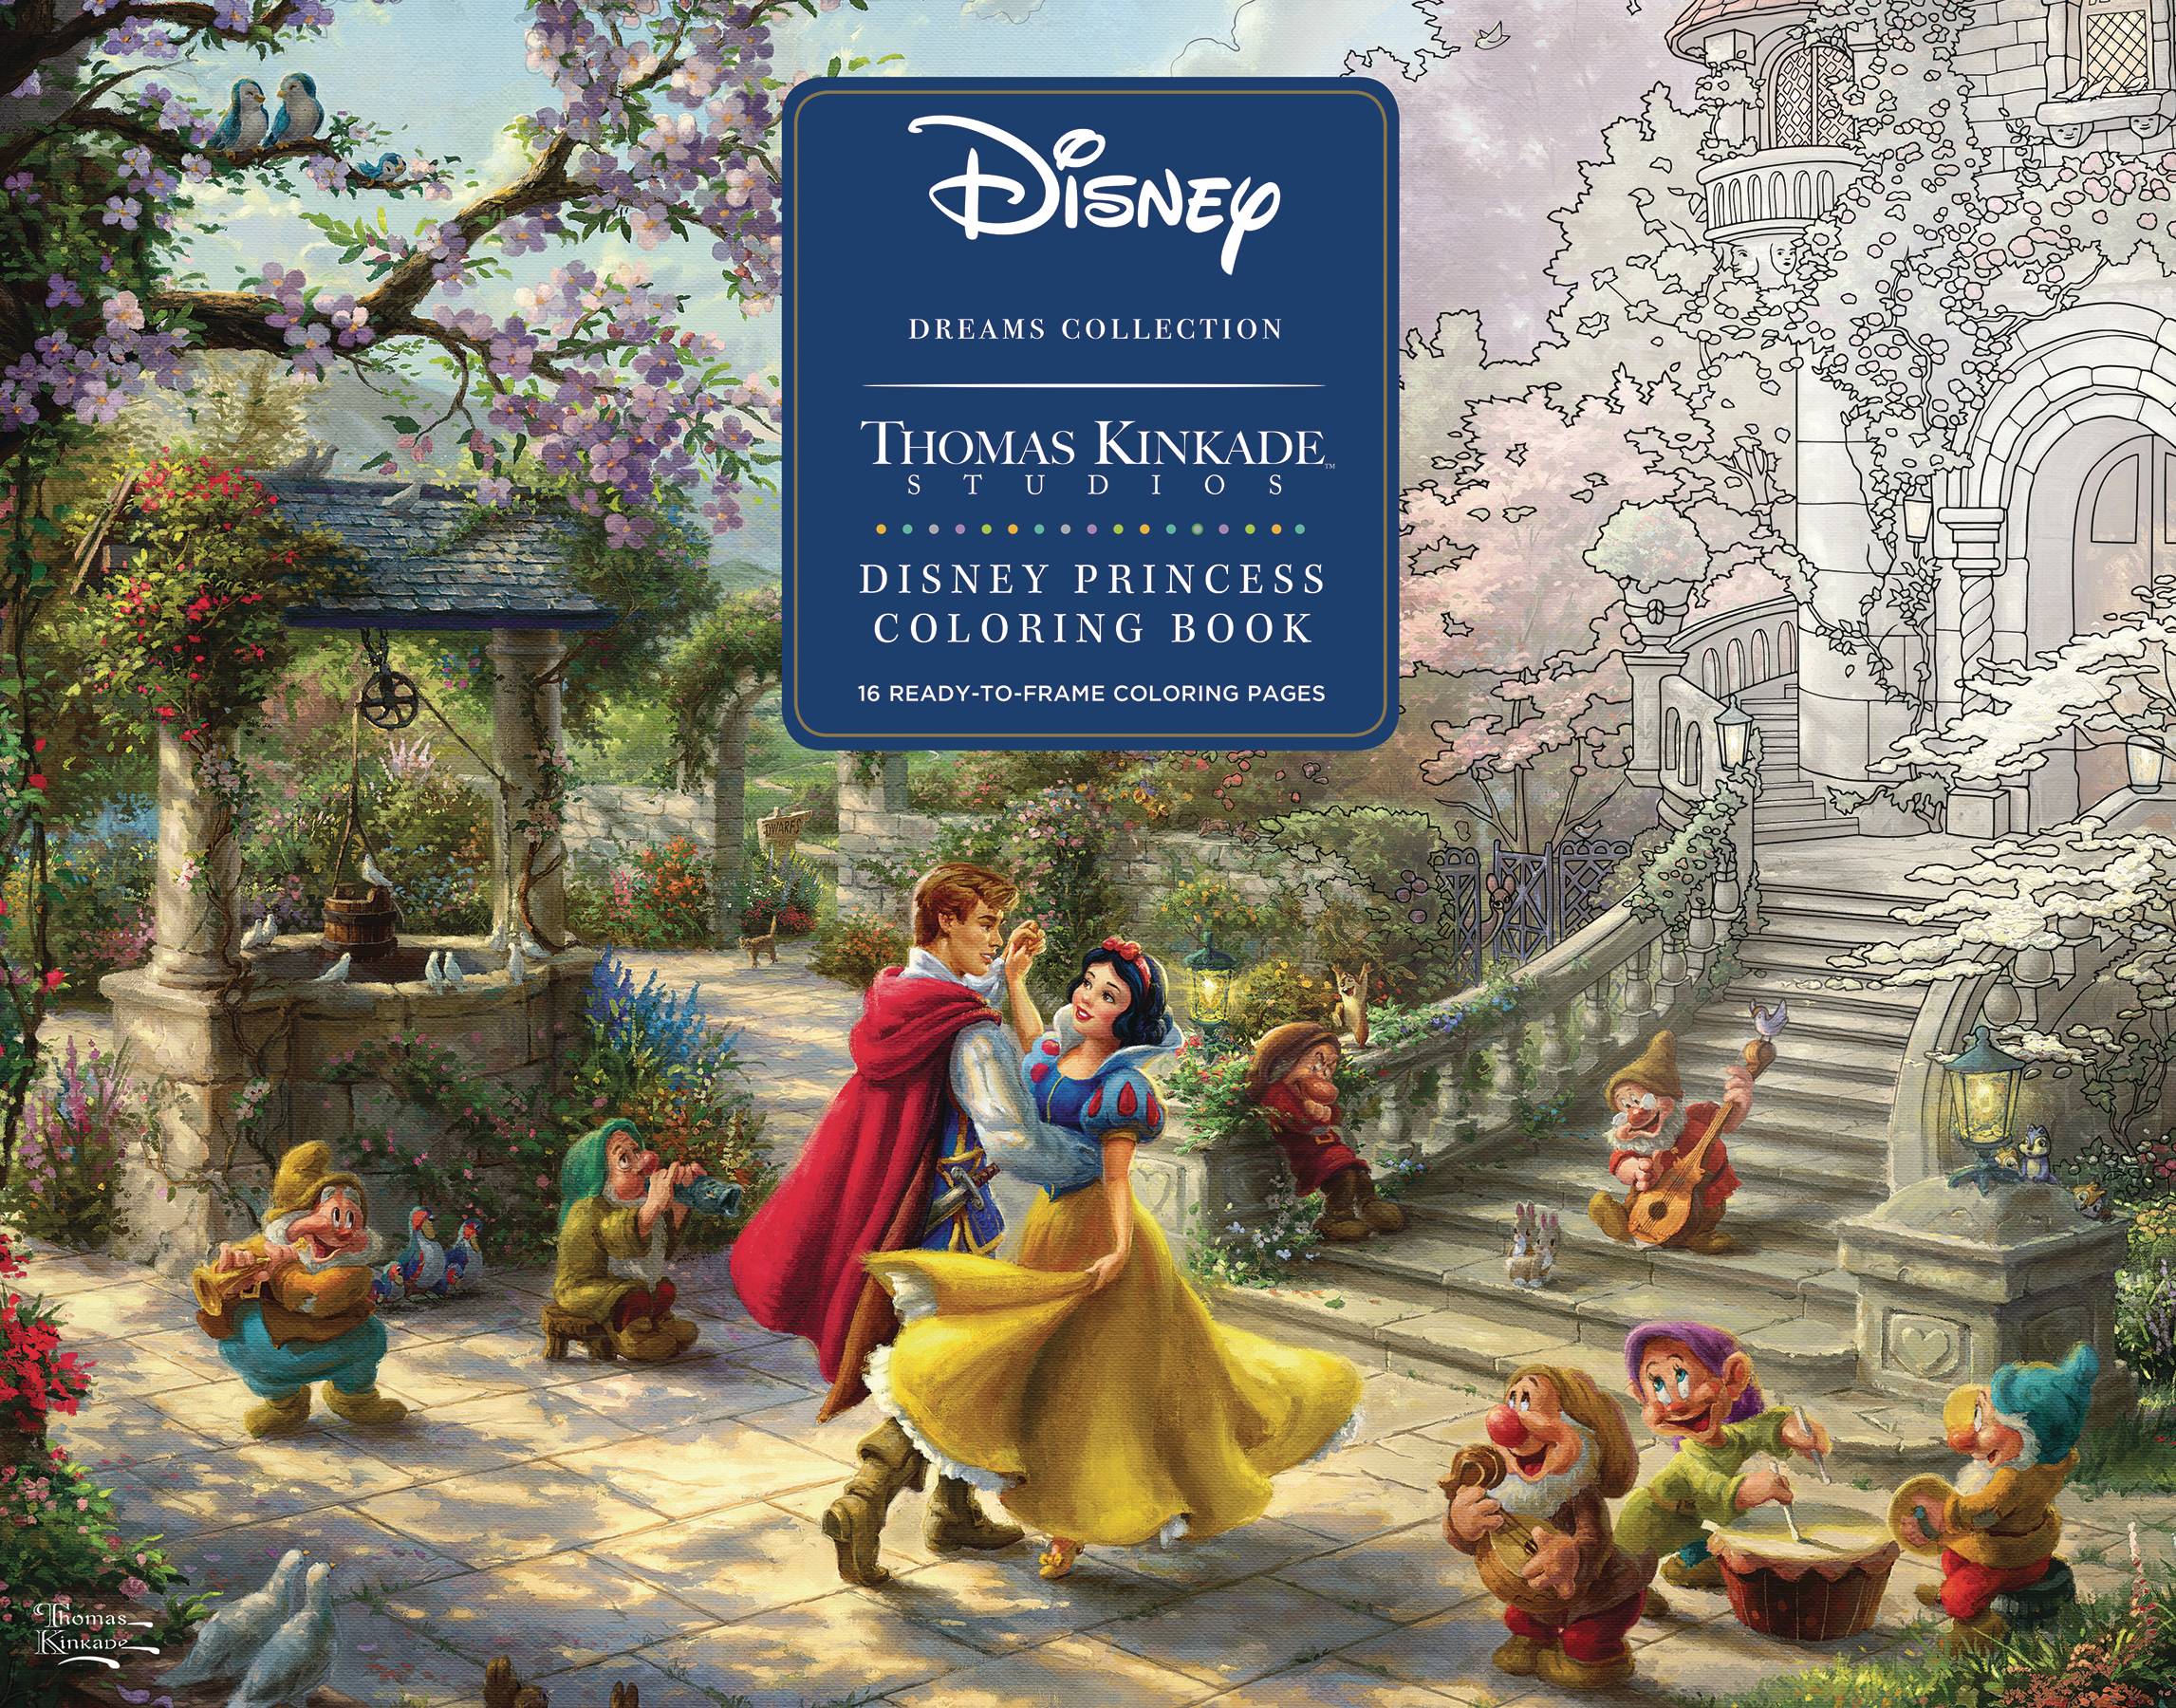 Disney Dreams Collected Thomas Kinkade Studios Coloring Book Soft Cover